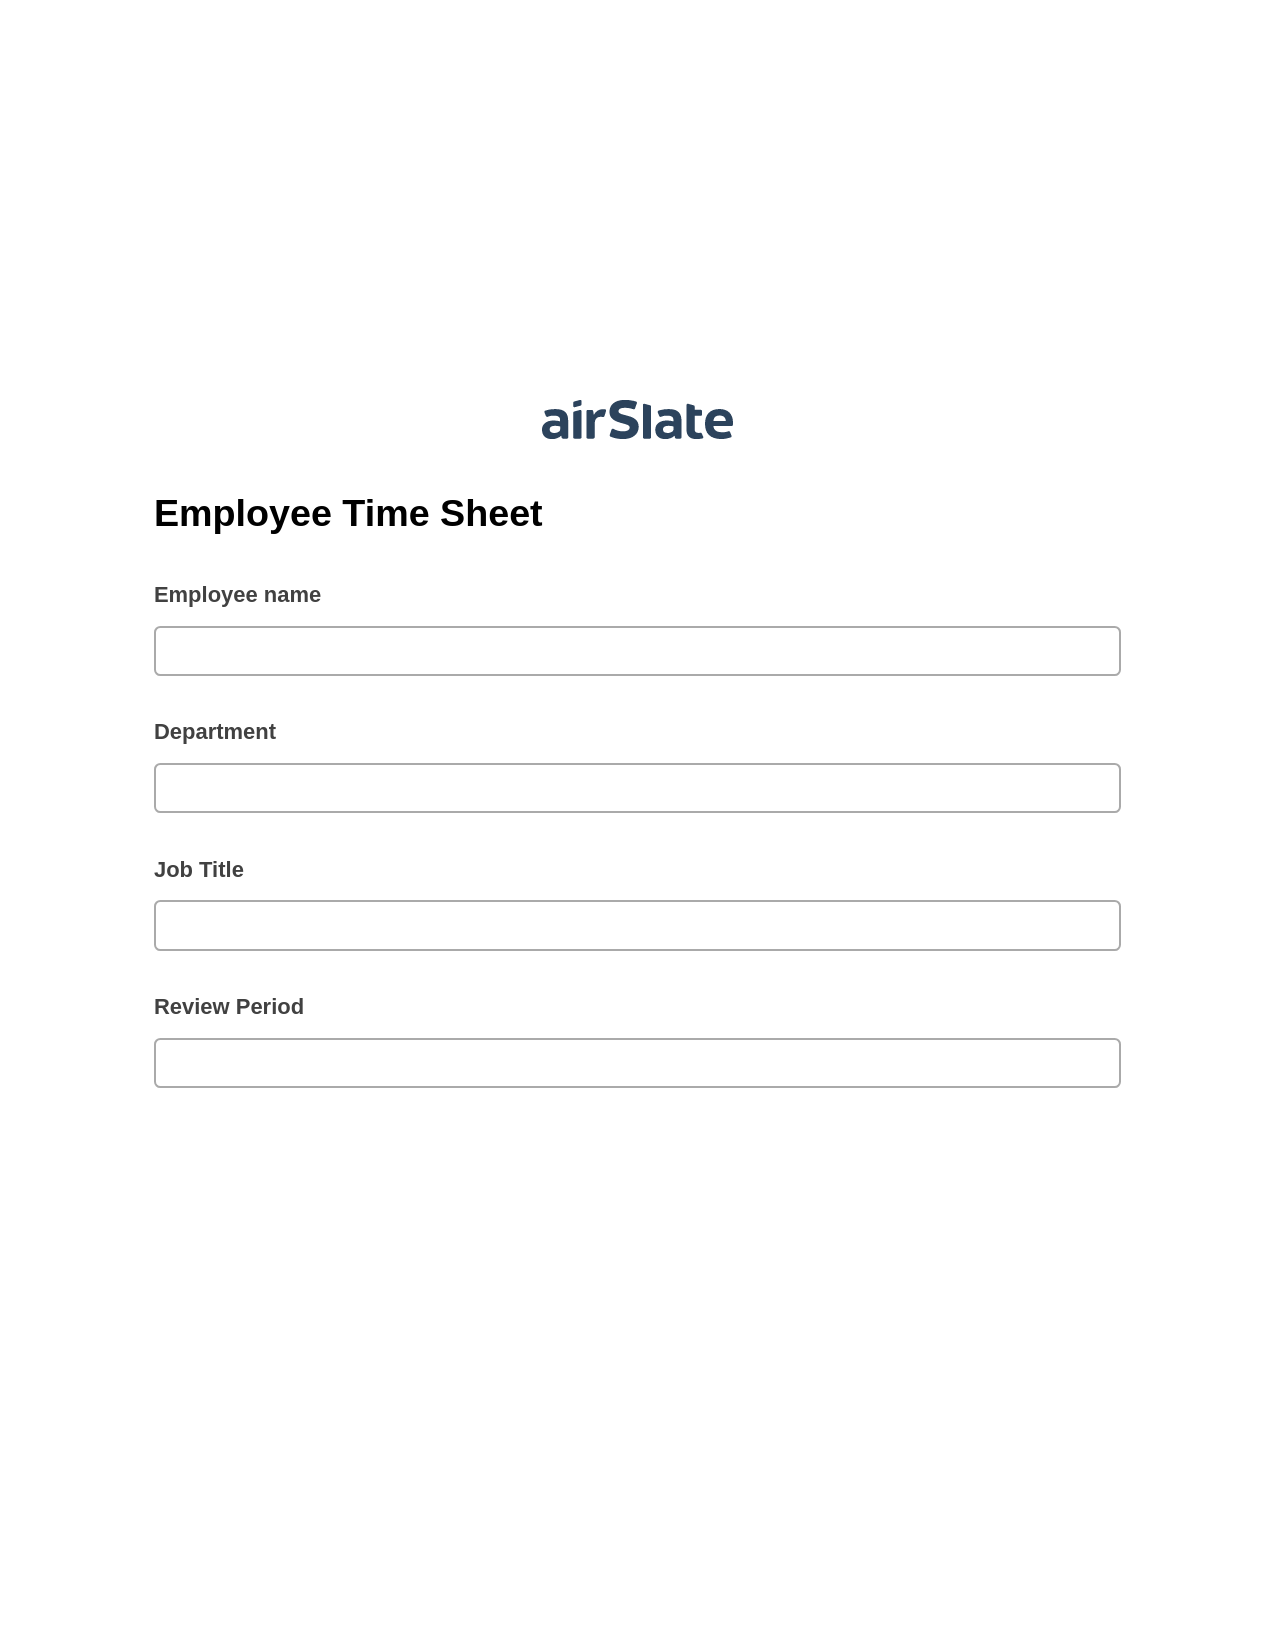 Multirole Employee Time Sheet Pre-fill from Smartsheet Bot, Google Cloud Print Bot, Archive to Dropbox Bot